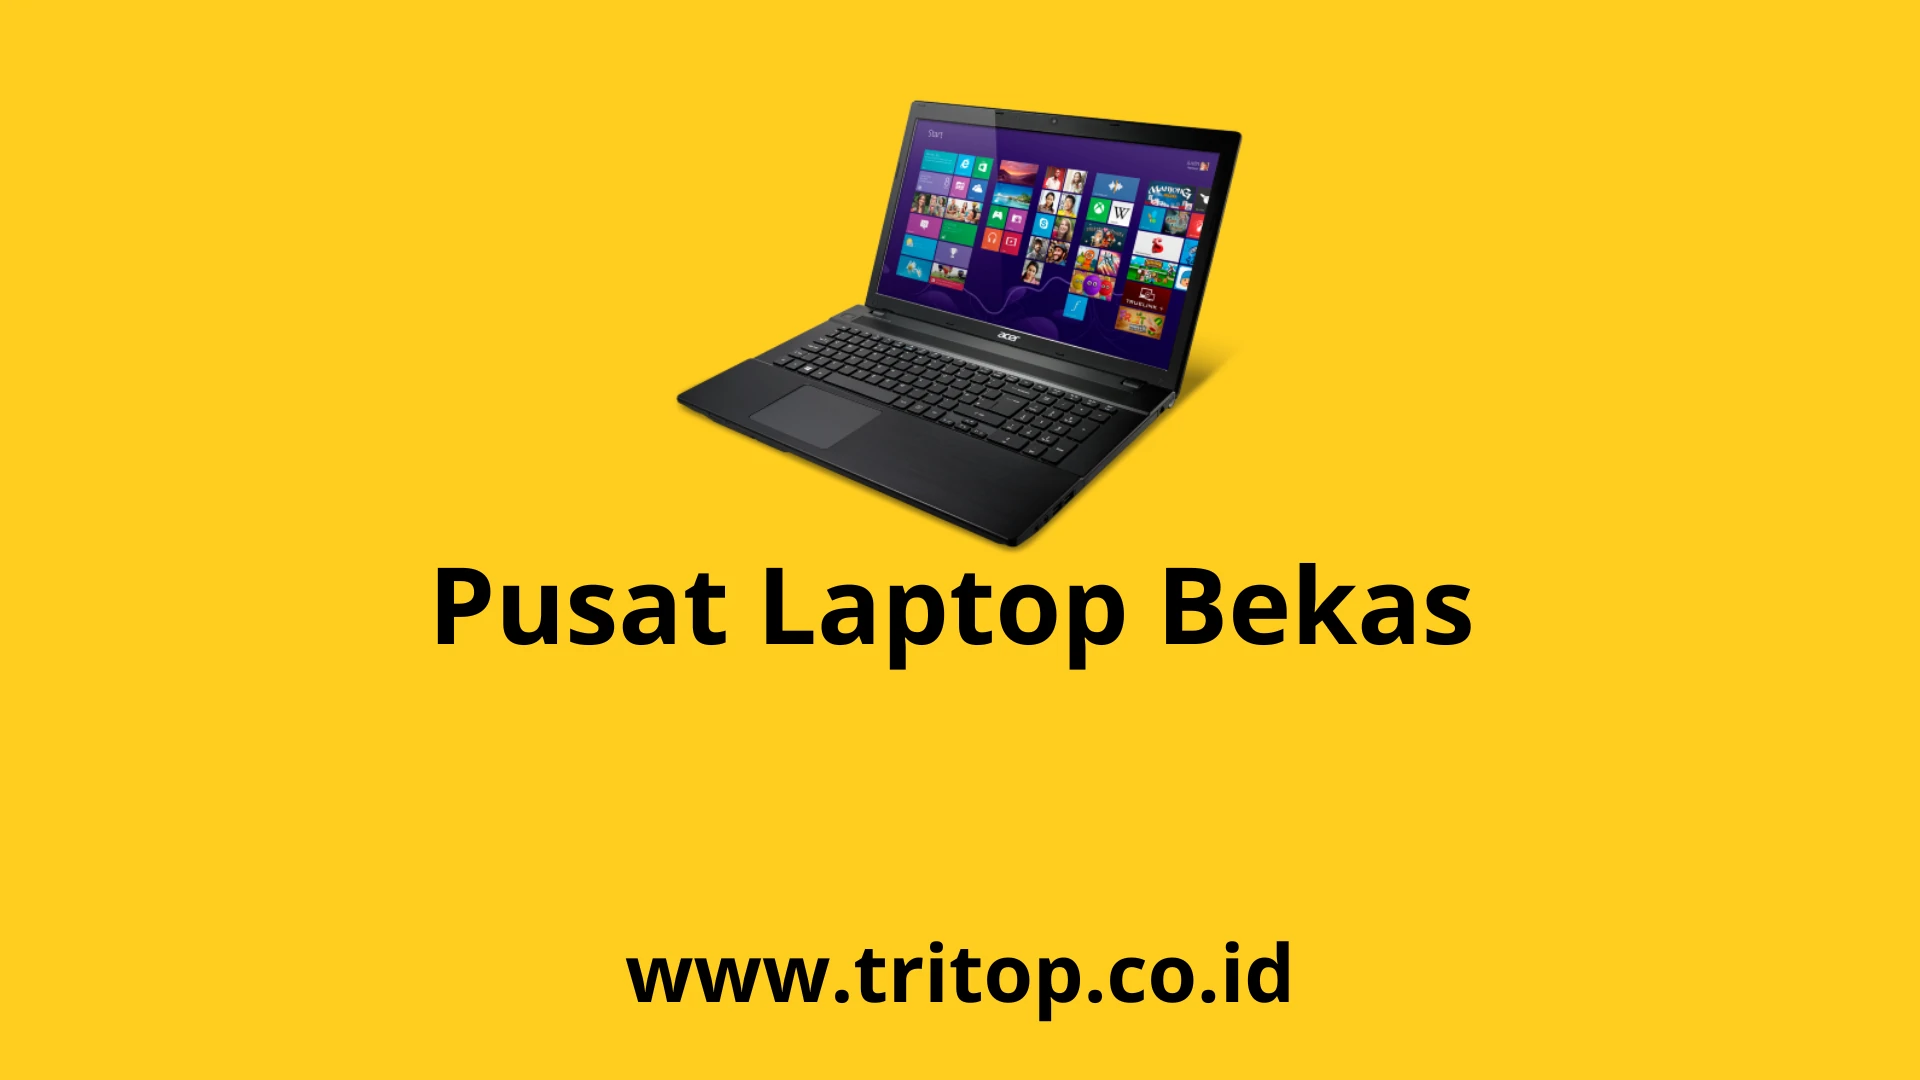 Pusat Laptop Bekas Tritop.co.id